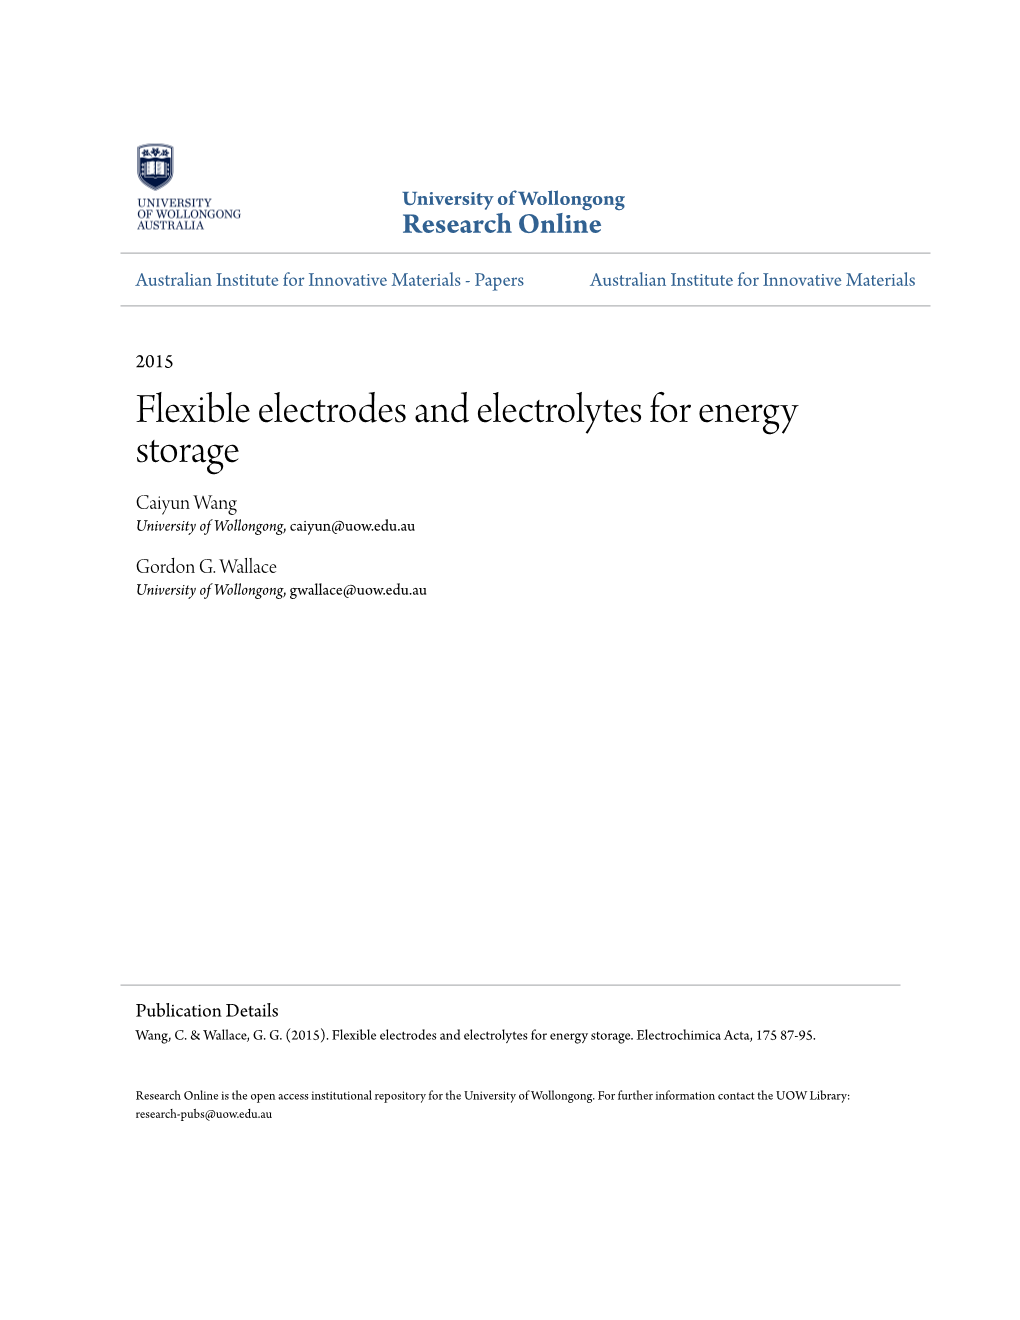 Flexible Electrodes and Electrolytes for Energy Storage Caiyun Wang University of Wollongong, Caiyun@Uow.Edu.Au